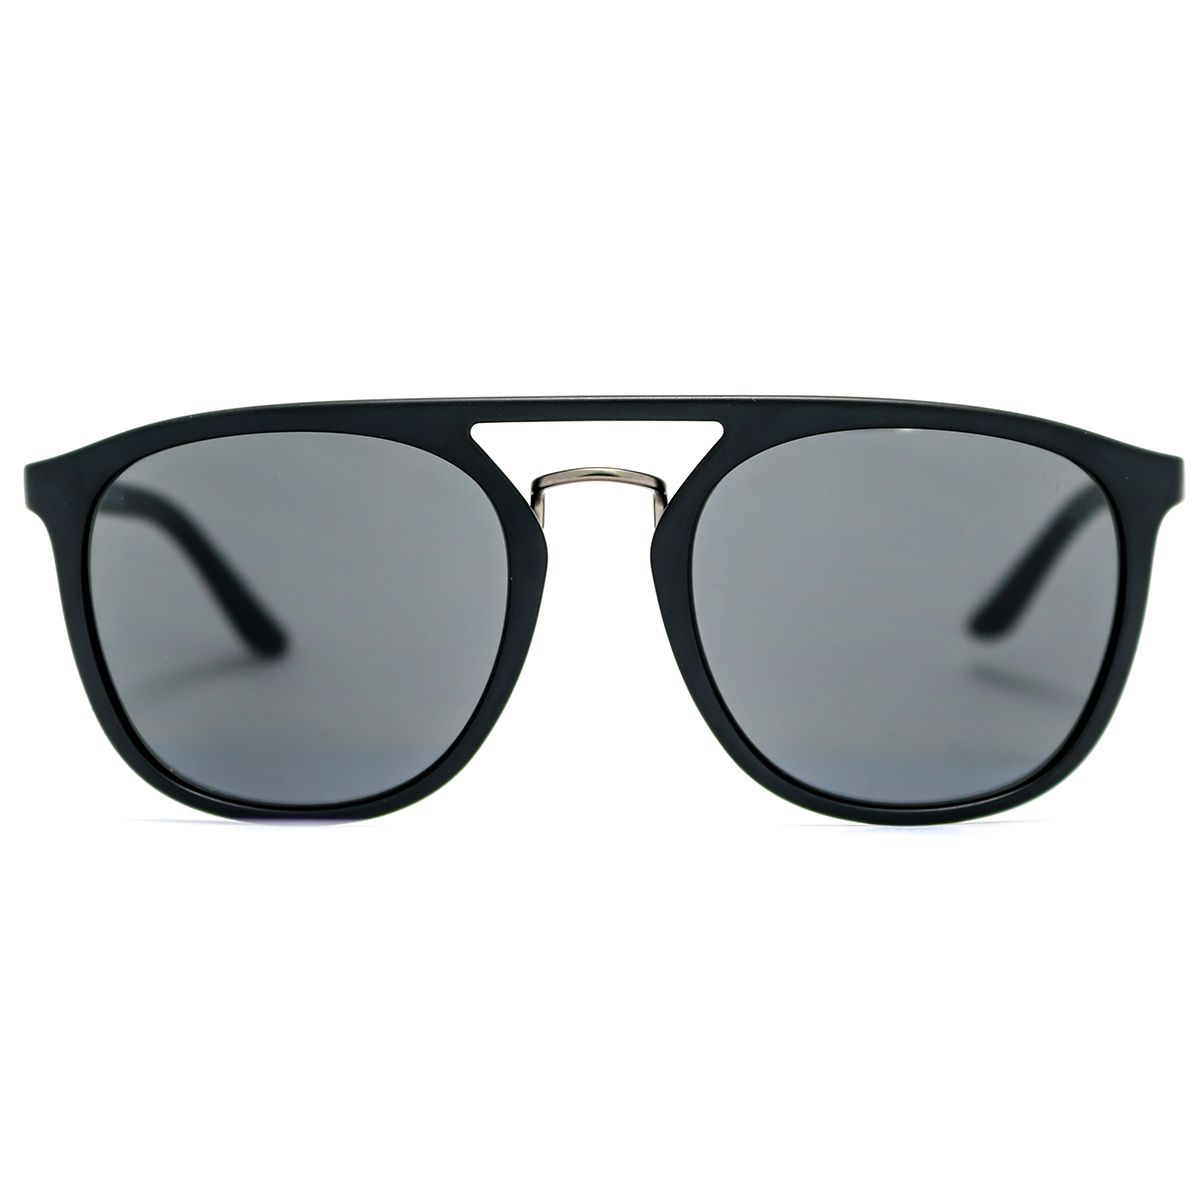 AR8118 Panthos Sunglasses 5001 87 - size 53